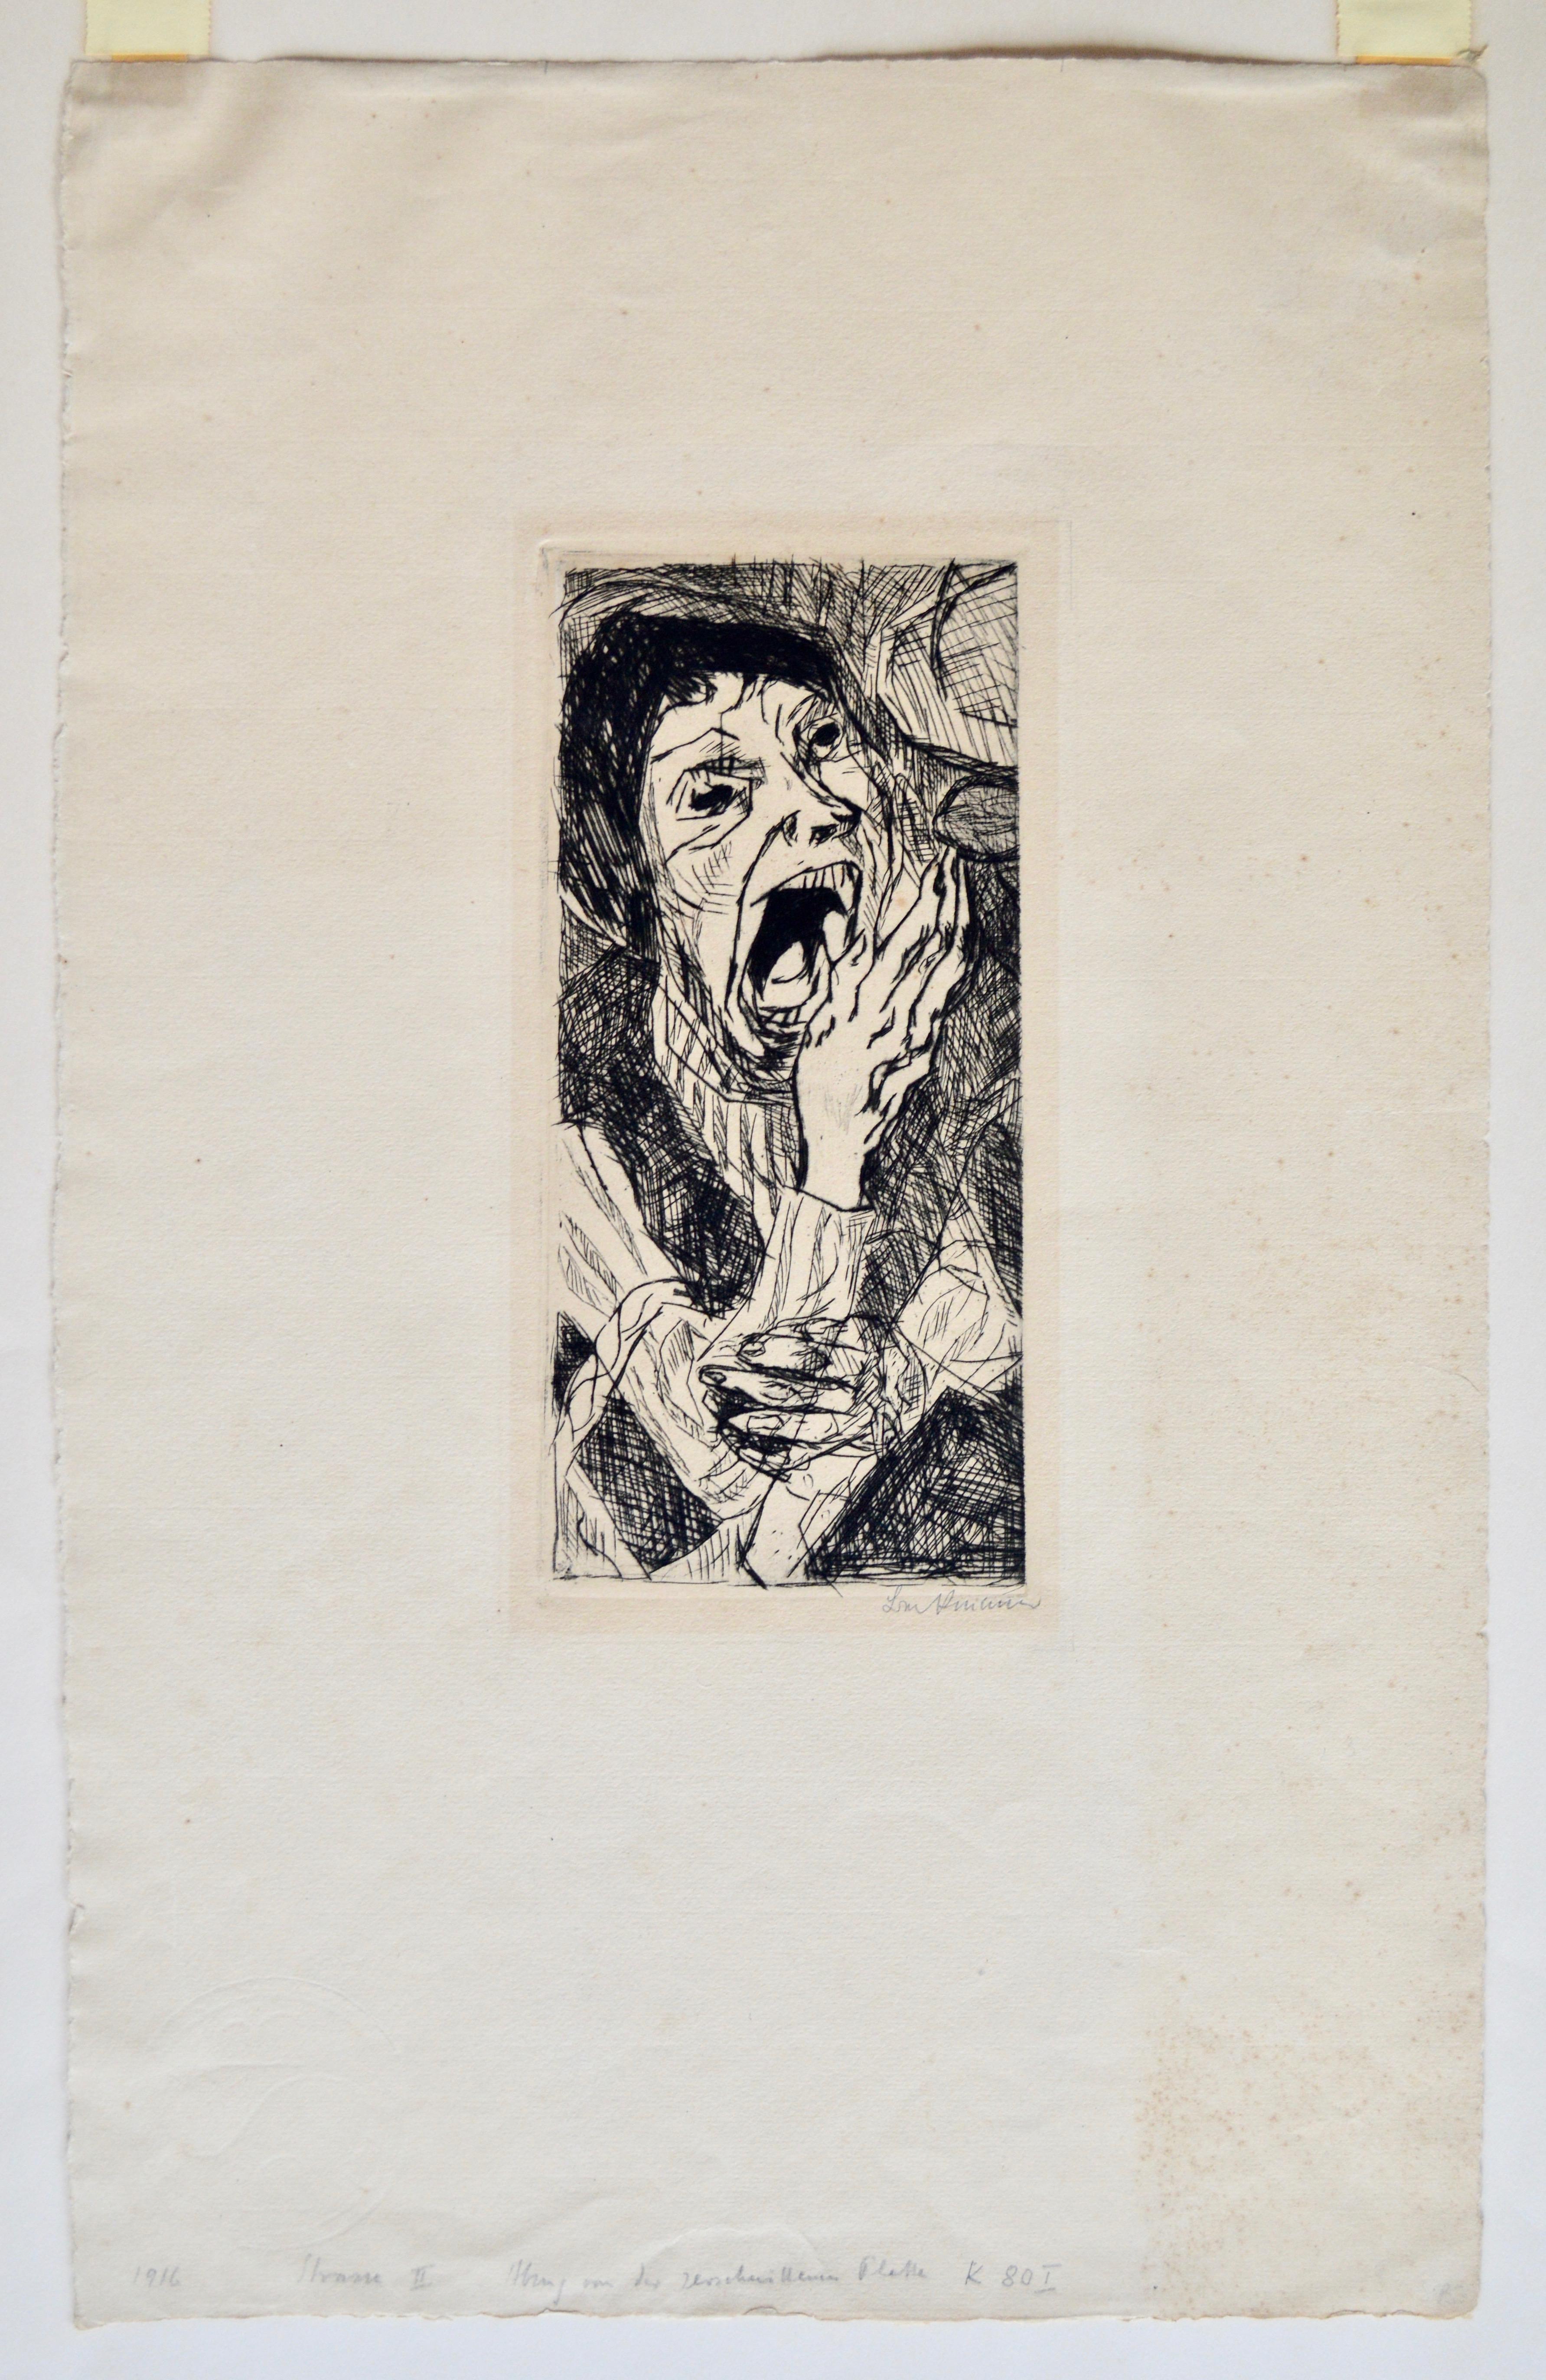 Max Beckmann (German, 1884-1950) German Expressionist

Date: 1916
Medium: Drypoint etching
Dimensions:
Plate - 3 5/8” x 7 5/8” (~9.2 x 19.4 cm)
Sheet - approx. 10” x 16.5” (~25.4 x 41.9 cm)
Framed - 15” x 24” (~38 x 61 cm)
Paper: Cream,